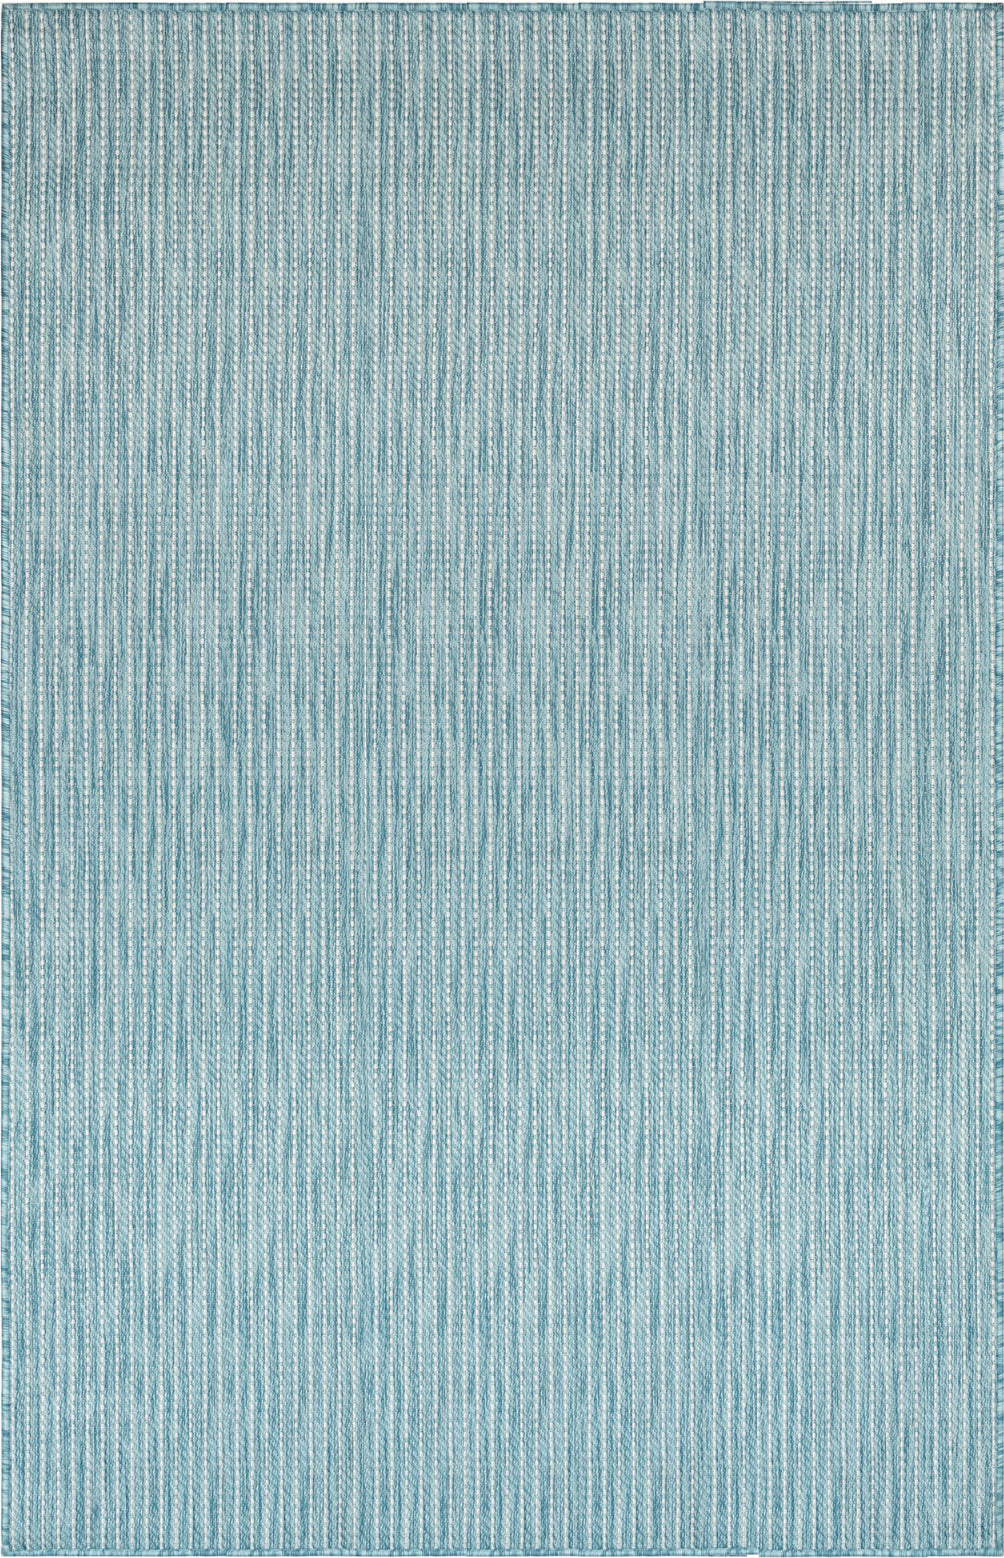 Trans Ocean Carmel 8422/04 Texture Stripe Blue Area Rug by Liora Manne